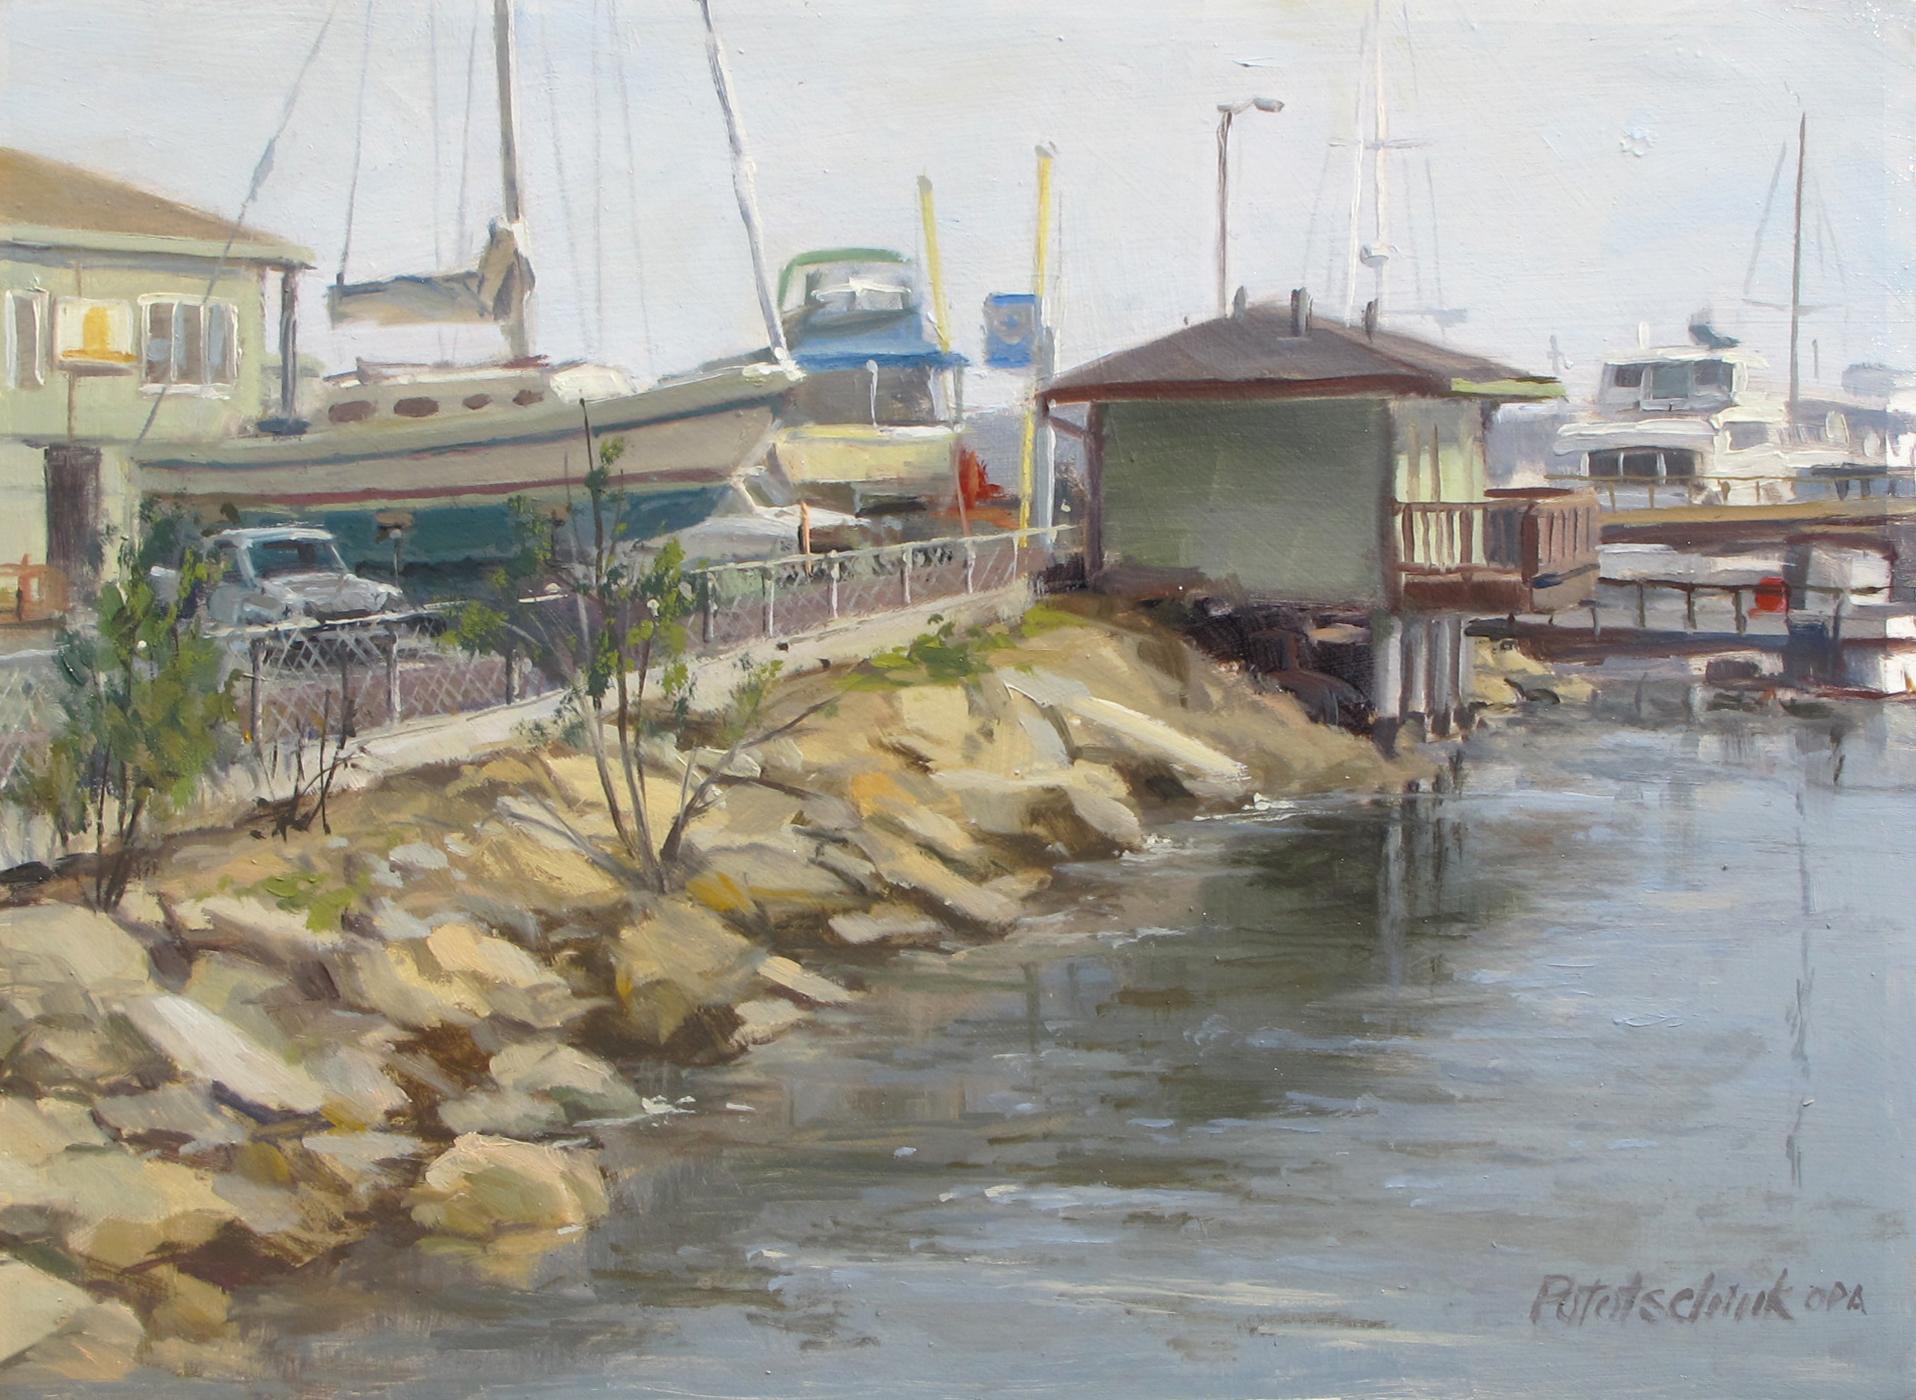 John Pototschnik Landscape Painting - "On the Dock of the Bay", Oil painting